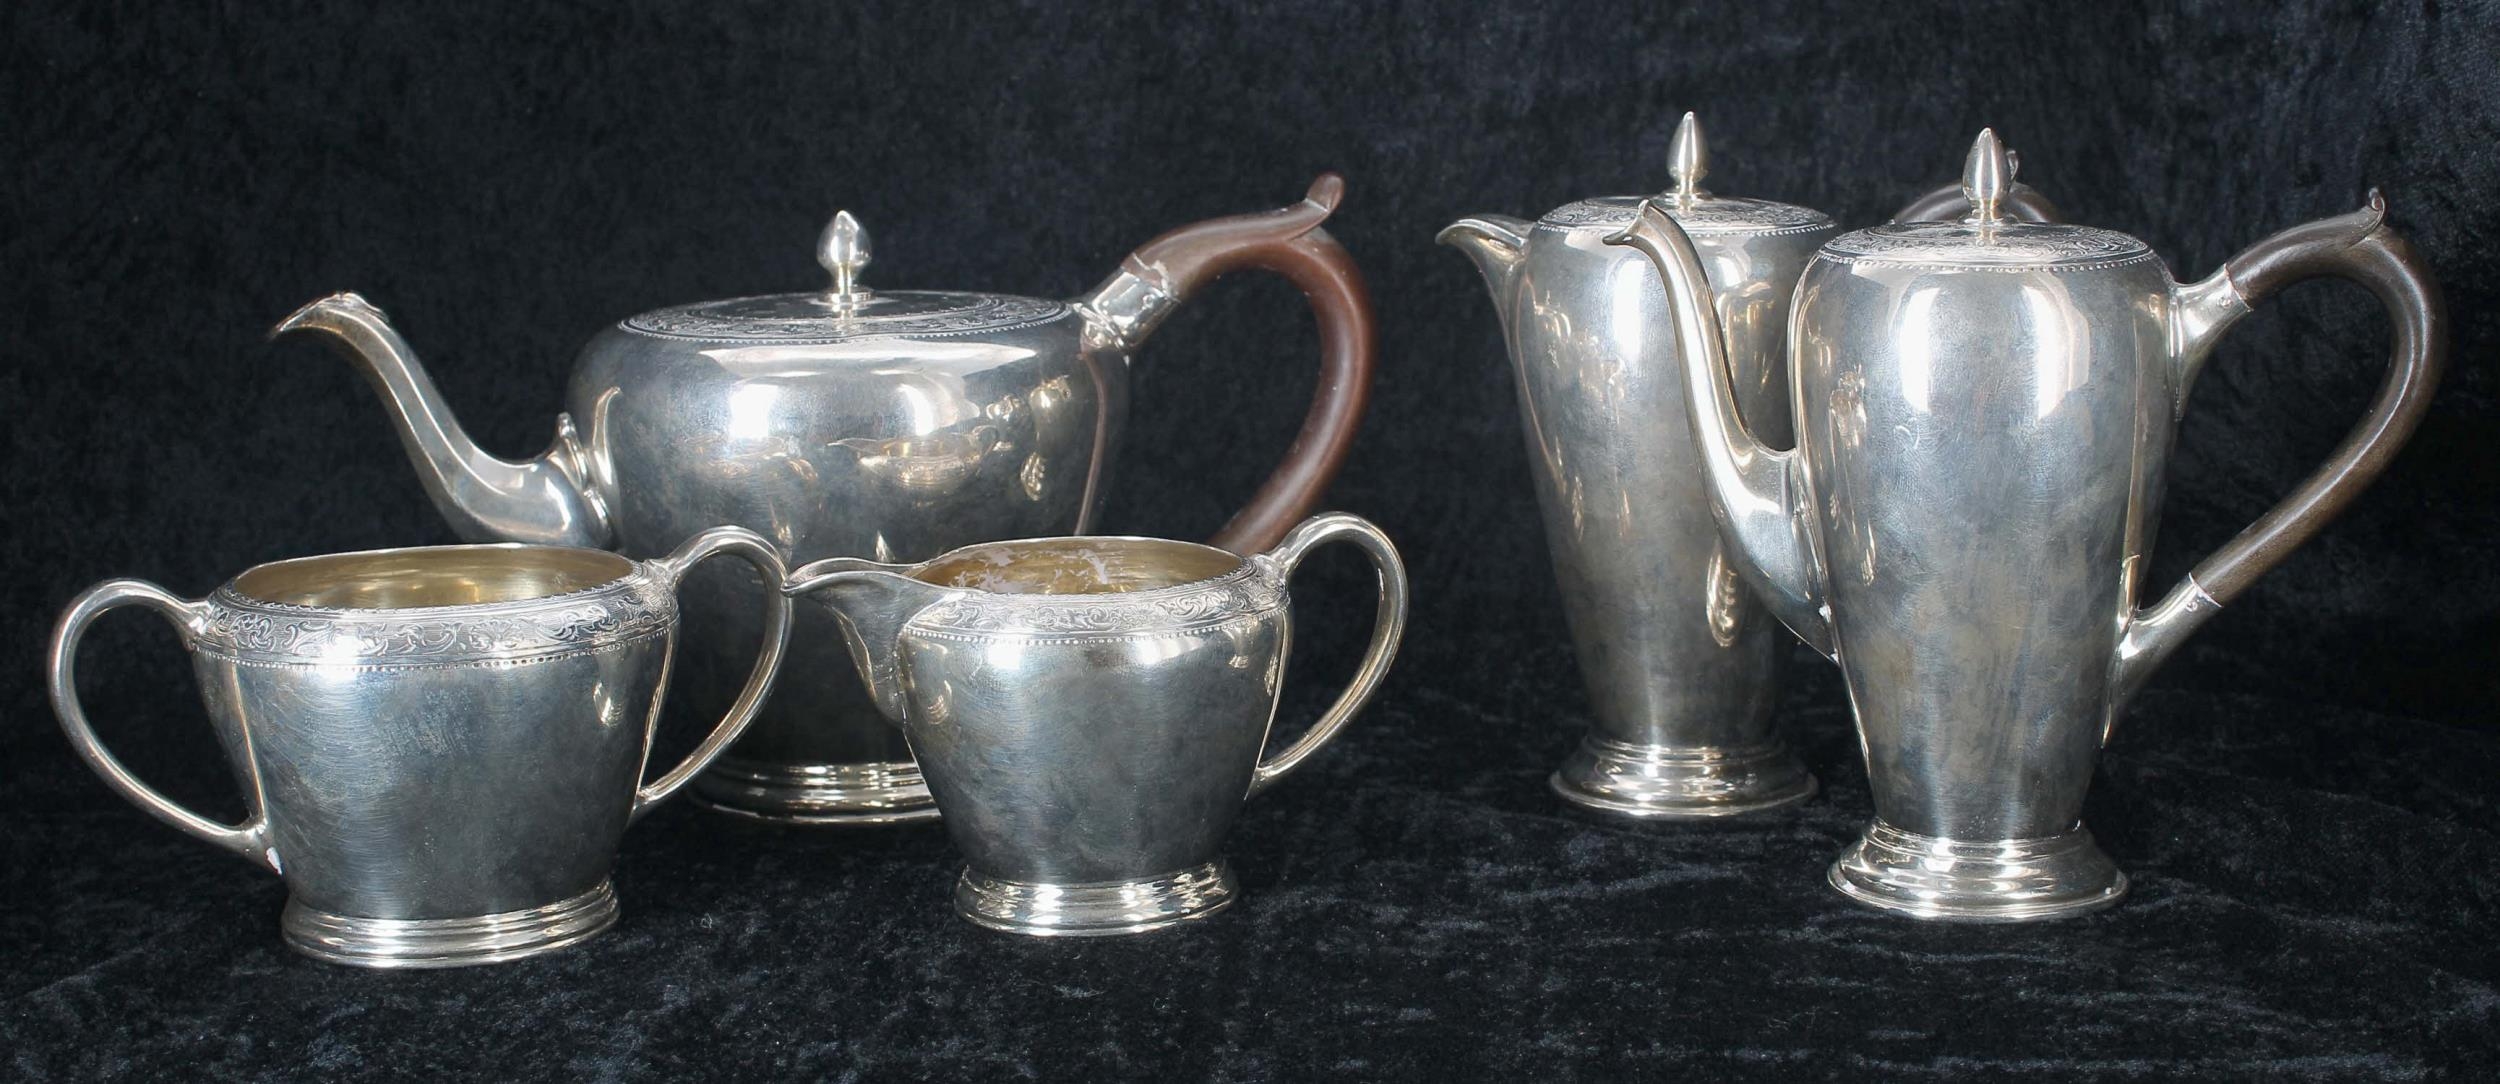 Edward Barnard & Sons for Tiffany & Co. London silver bachelor tea set, comprising teapot, cream jug